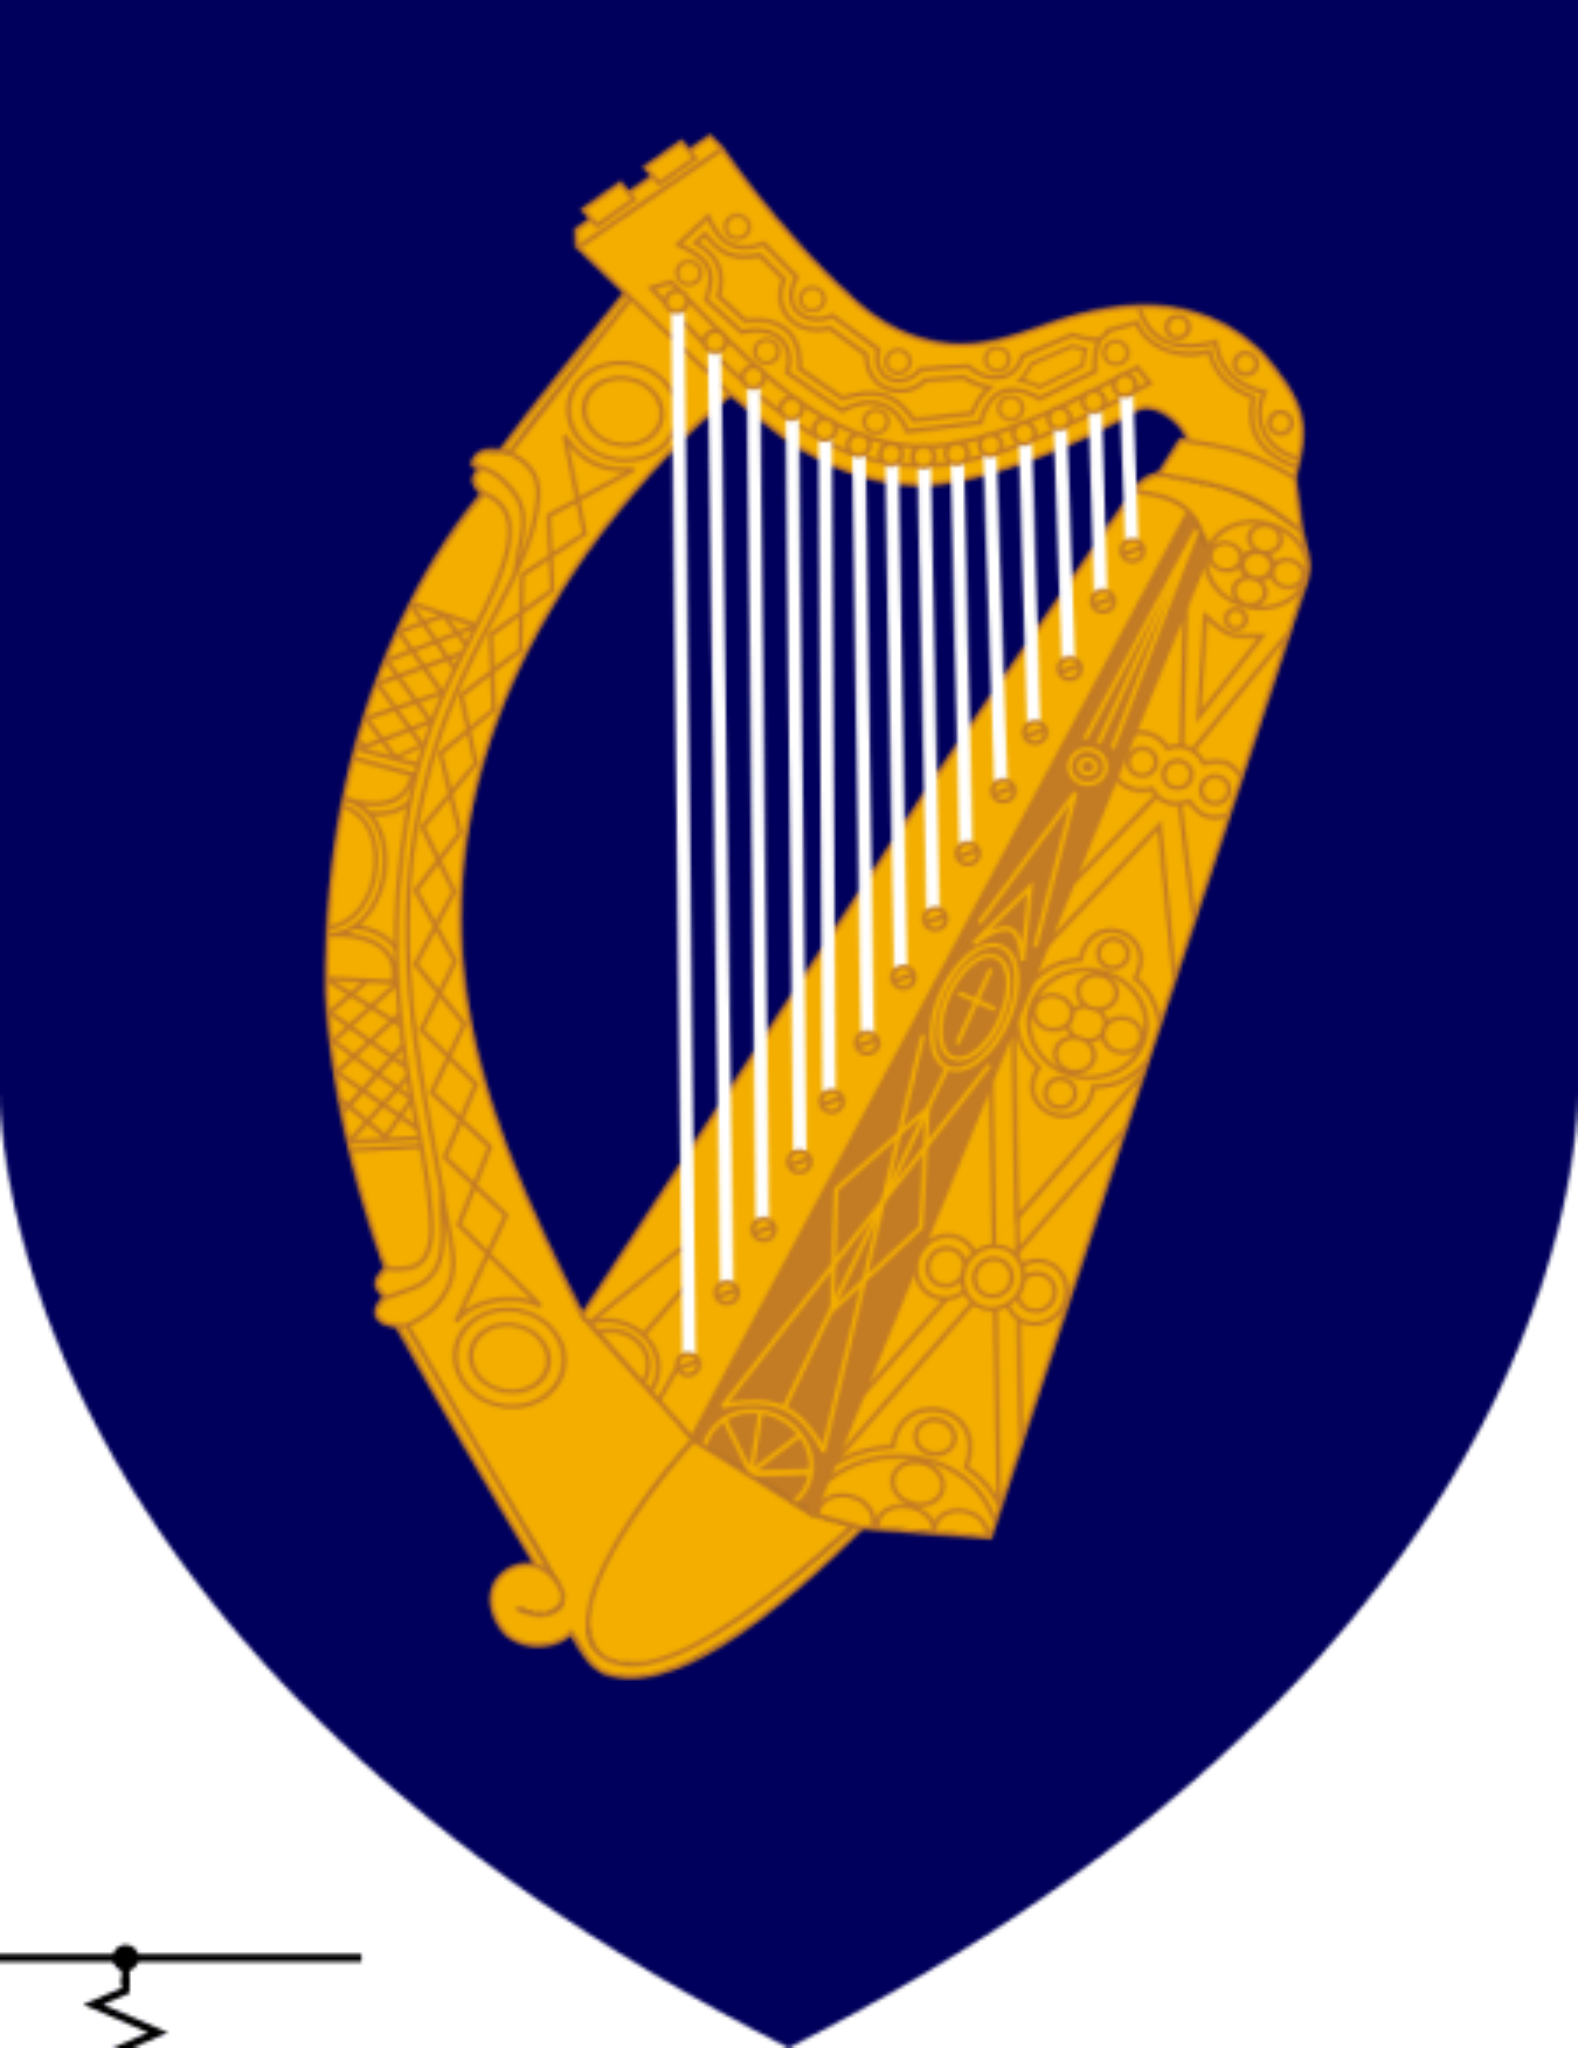 visit ireland logo